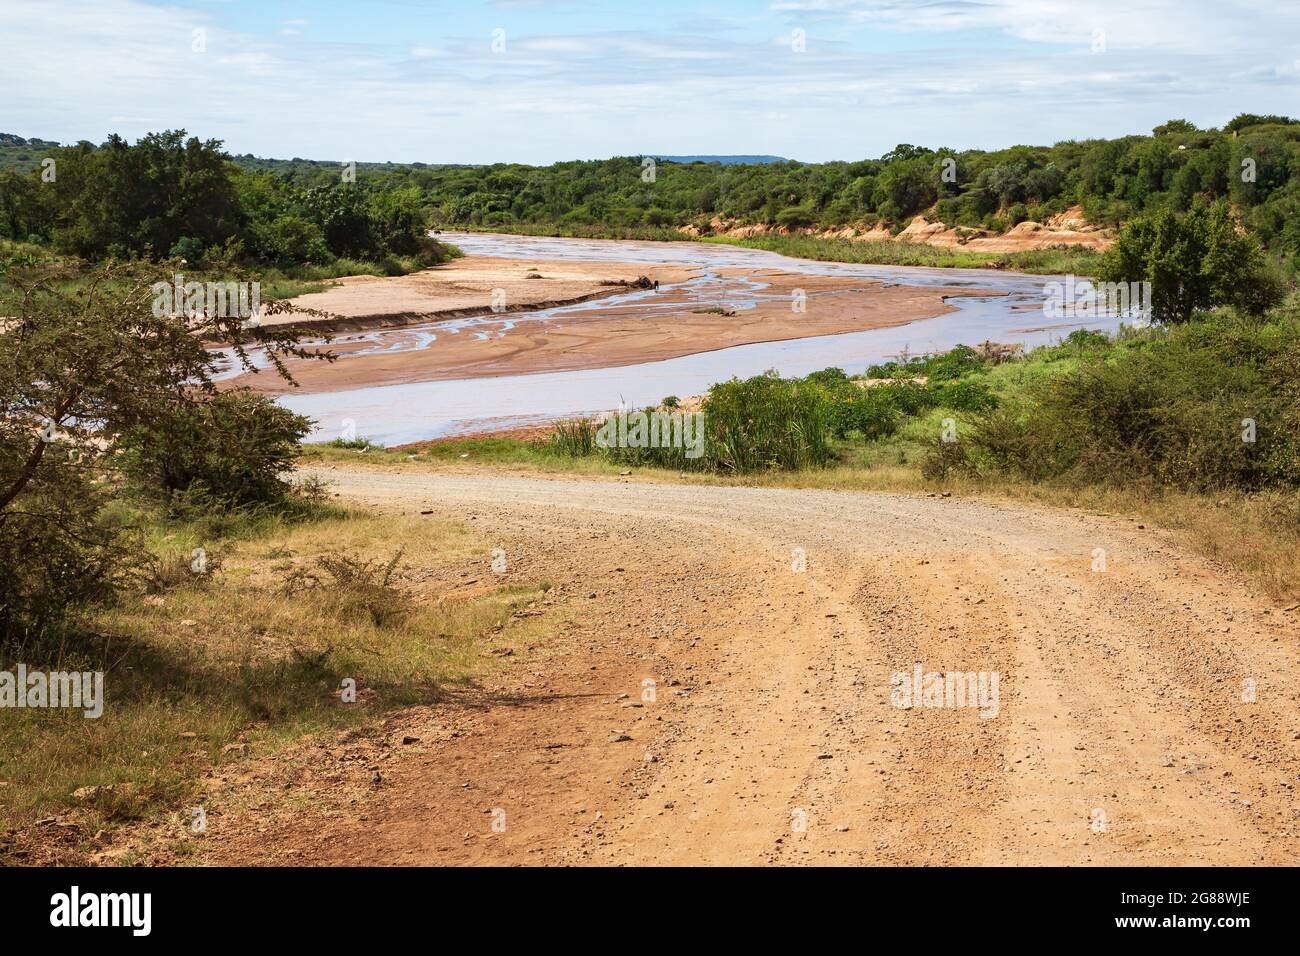 Dirt road approaching Ngwavuma River in Eswatini, Swaziland Stock Photo